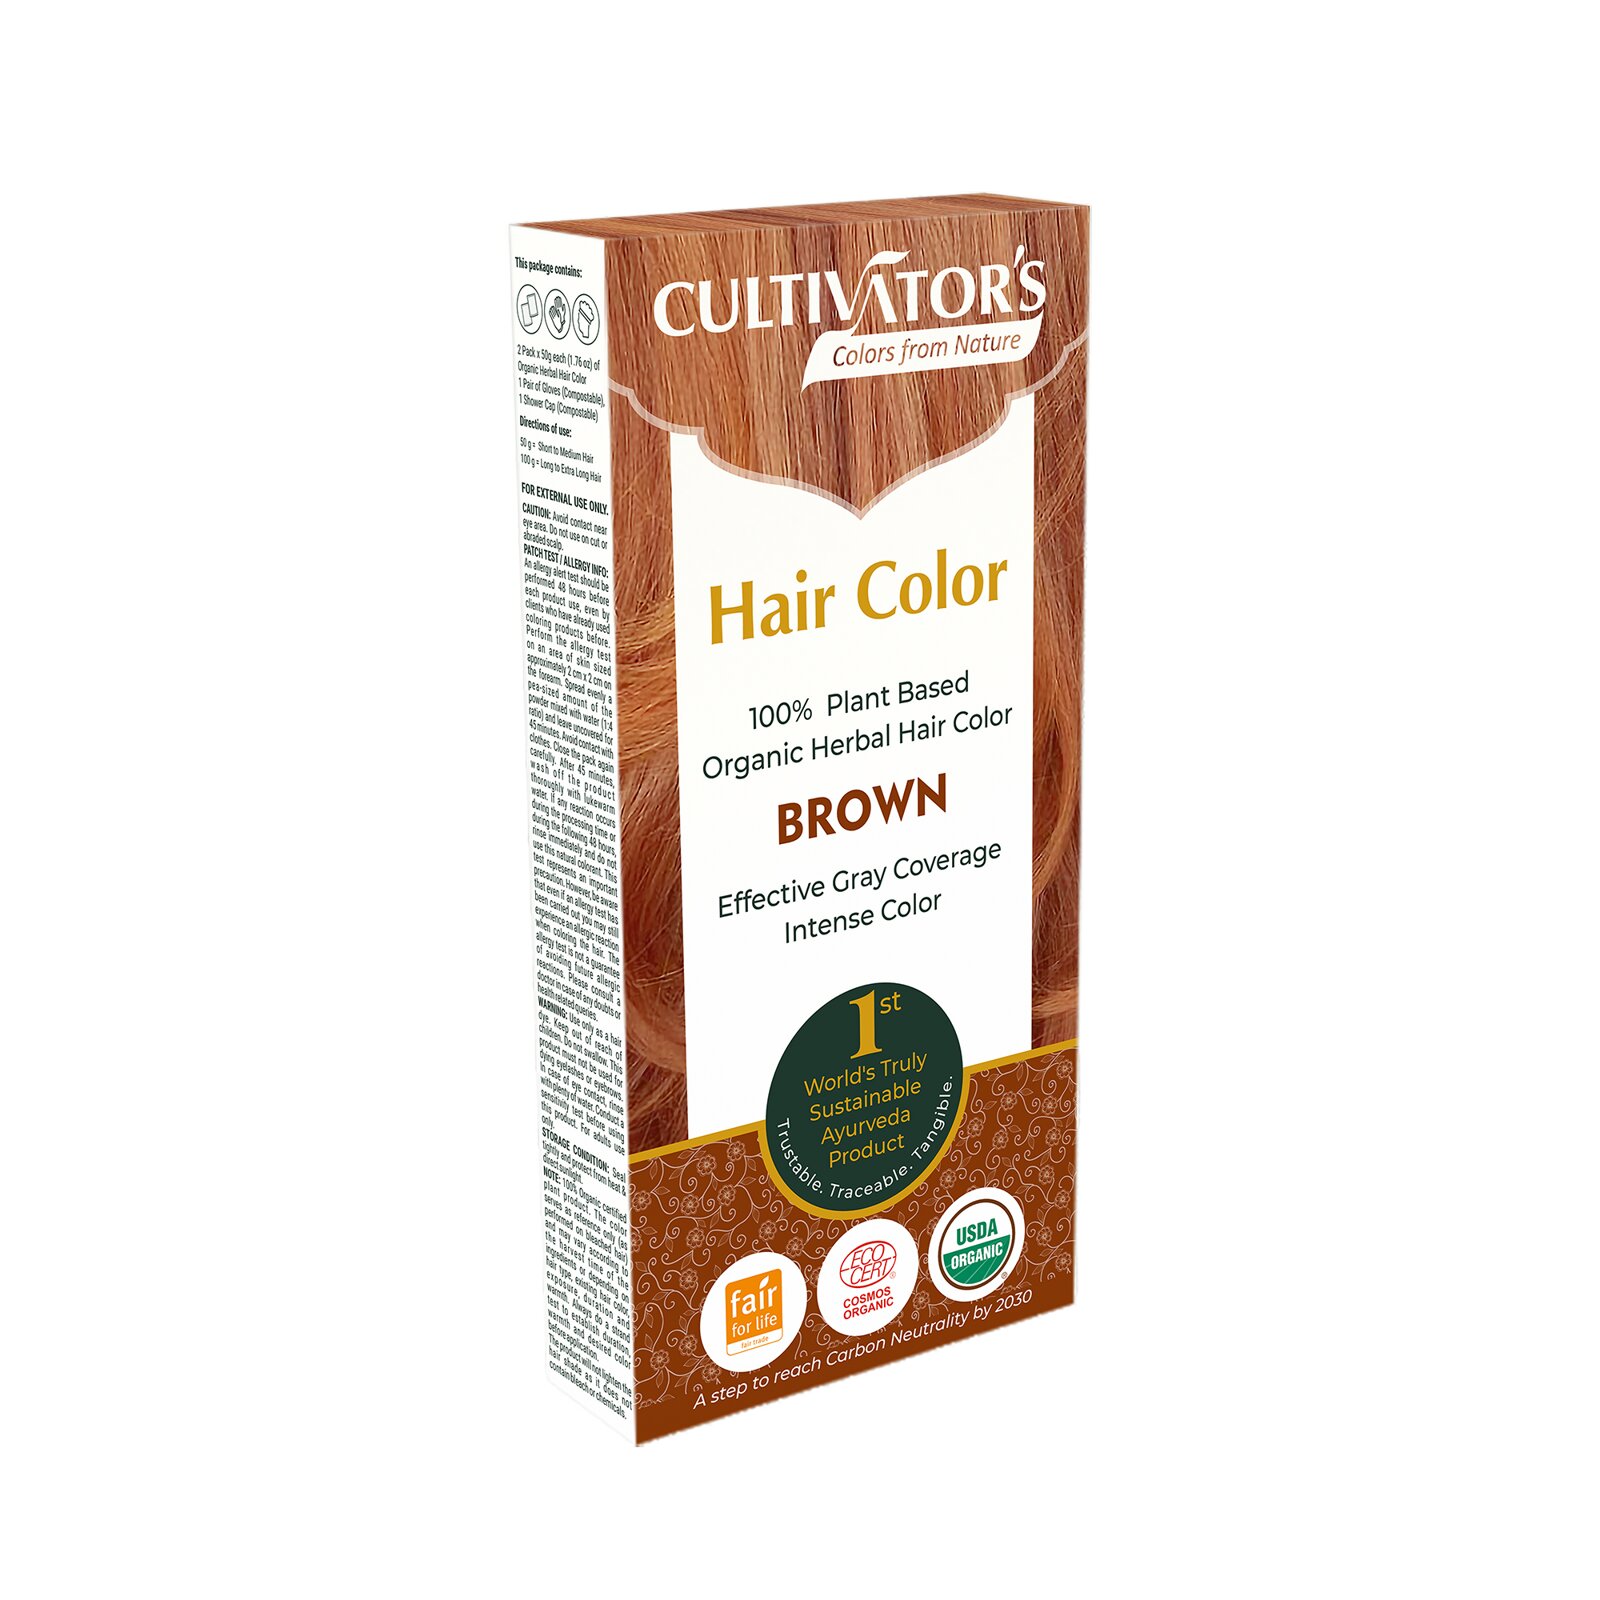 Cultivator's Organic Herbal Hair Color Hiusväri, Brown 